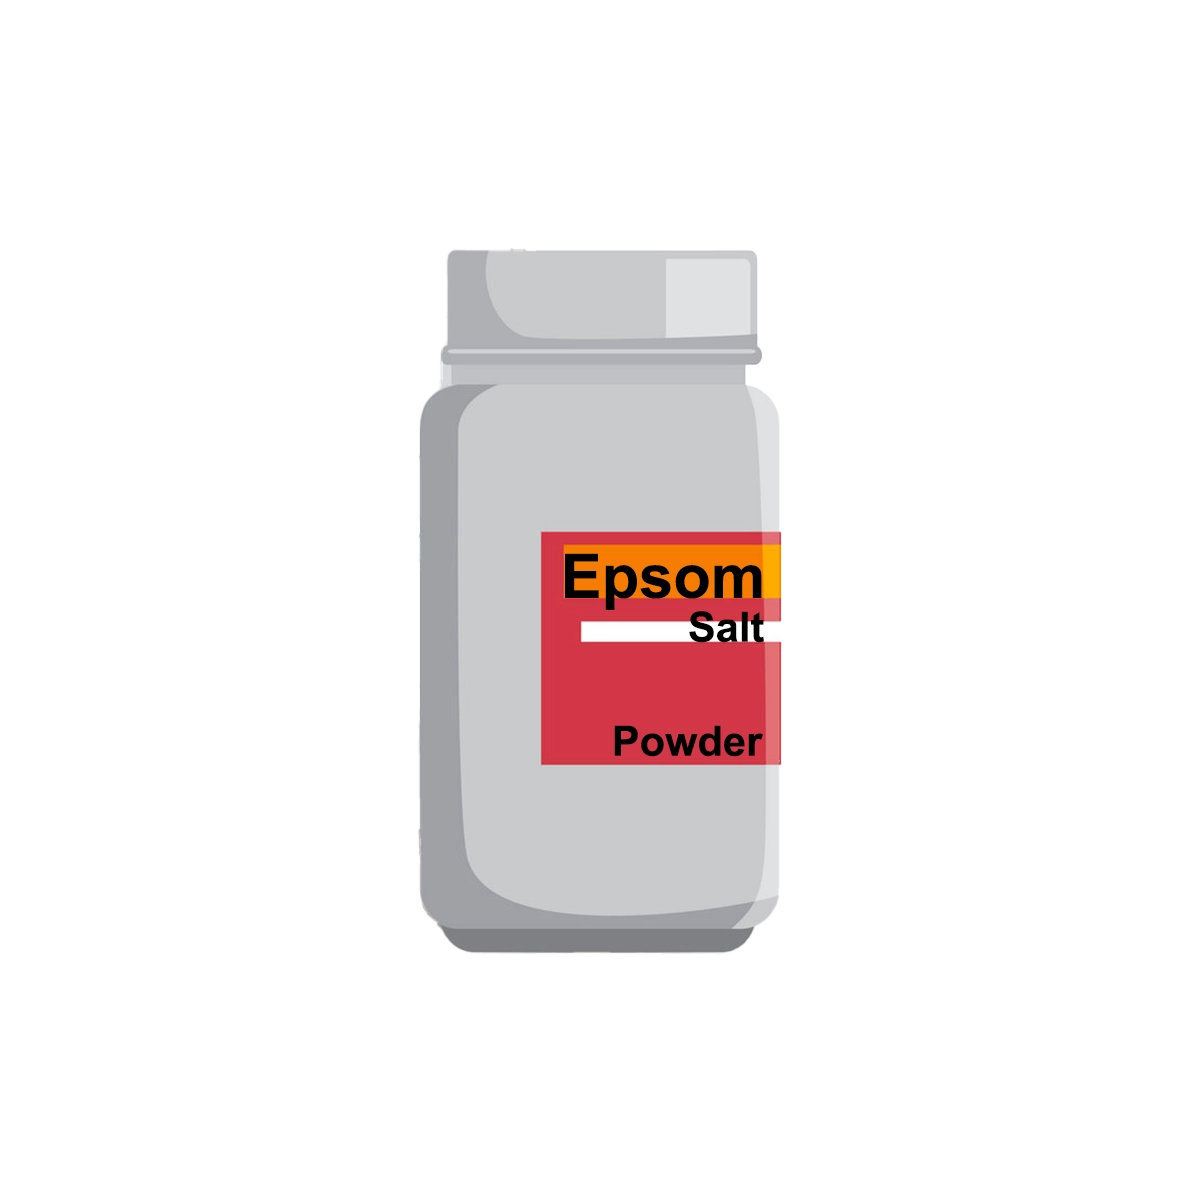 First product image of Epsom Salt Powder 50g